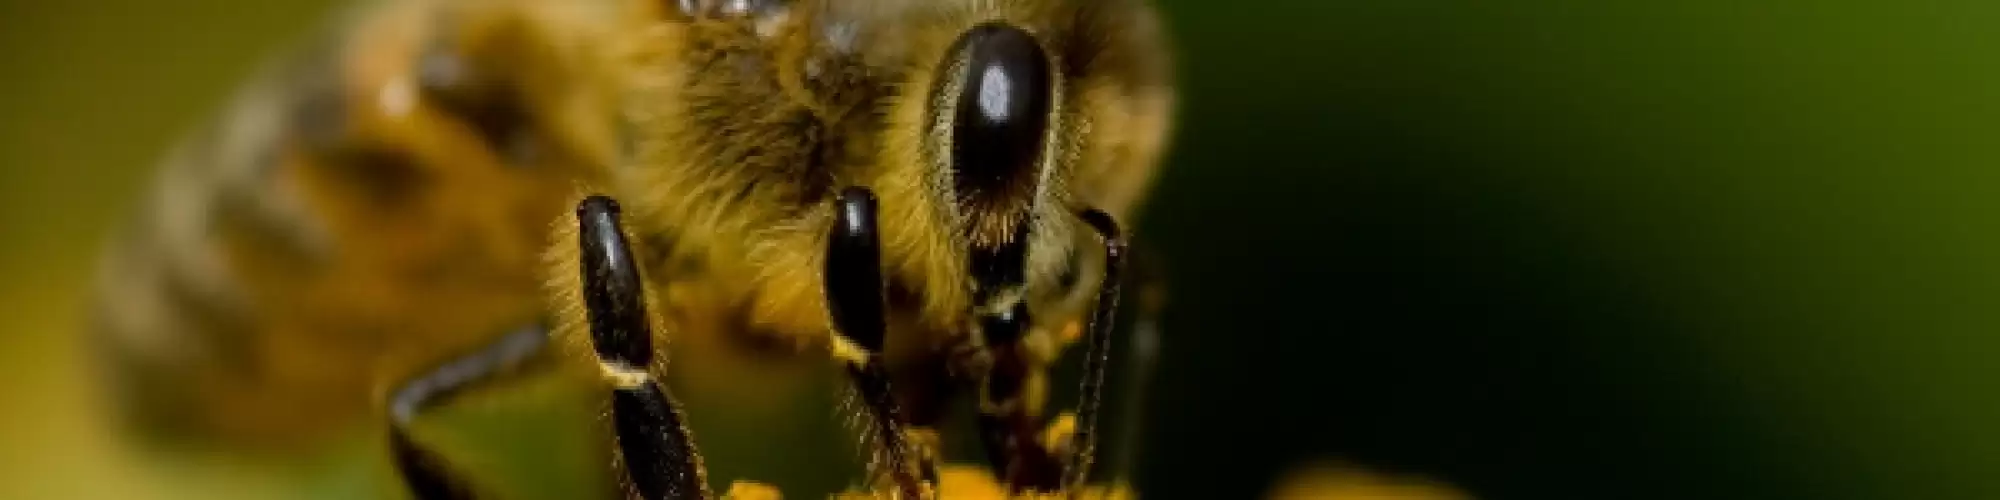 Bee big pic